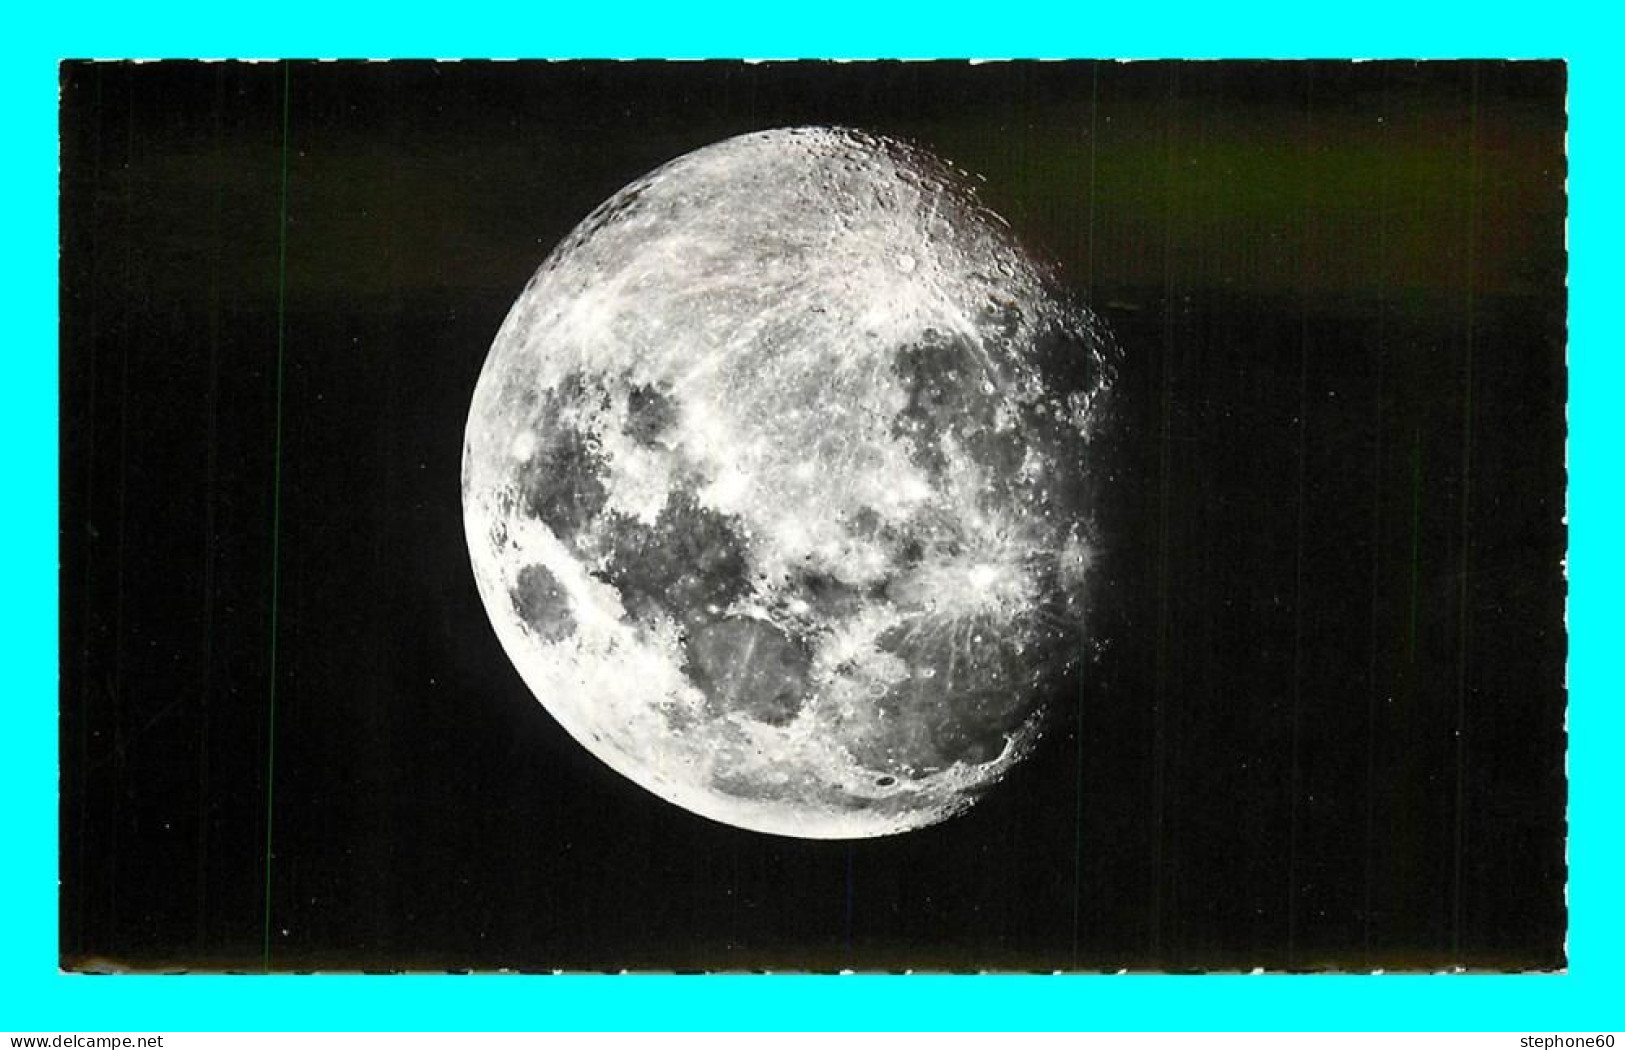 A805 / 473 65 - BAGNERES DE BIGORRE Observatoire Du Pic Du Midi La Lune - Bagneres De Bigorre